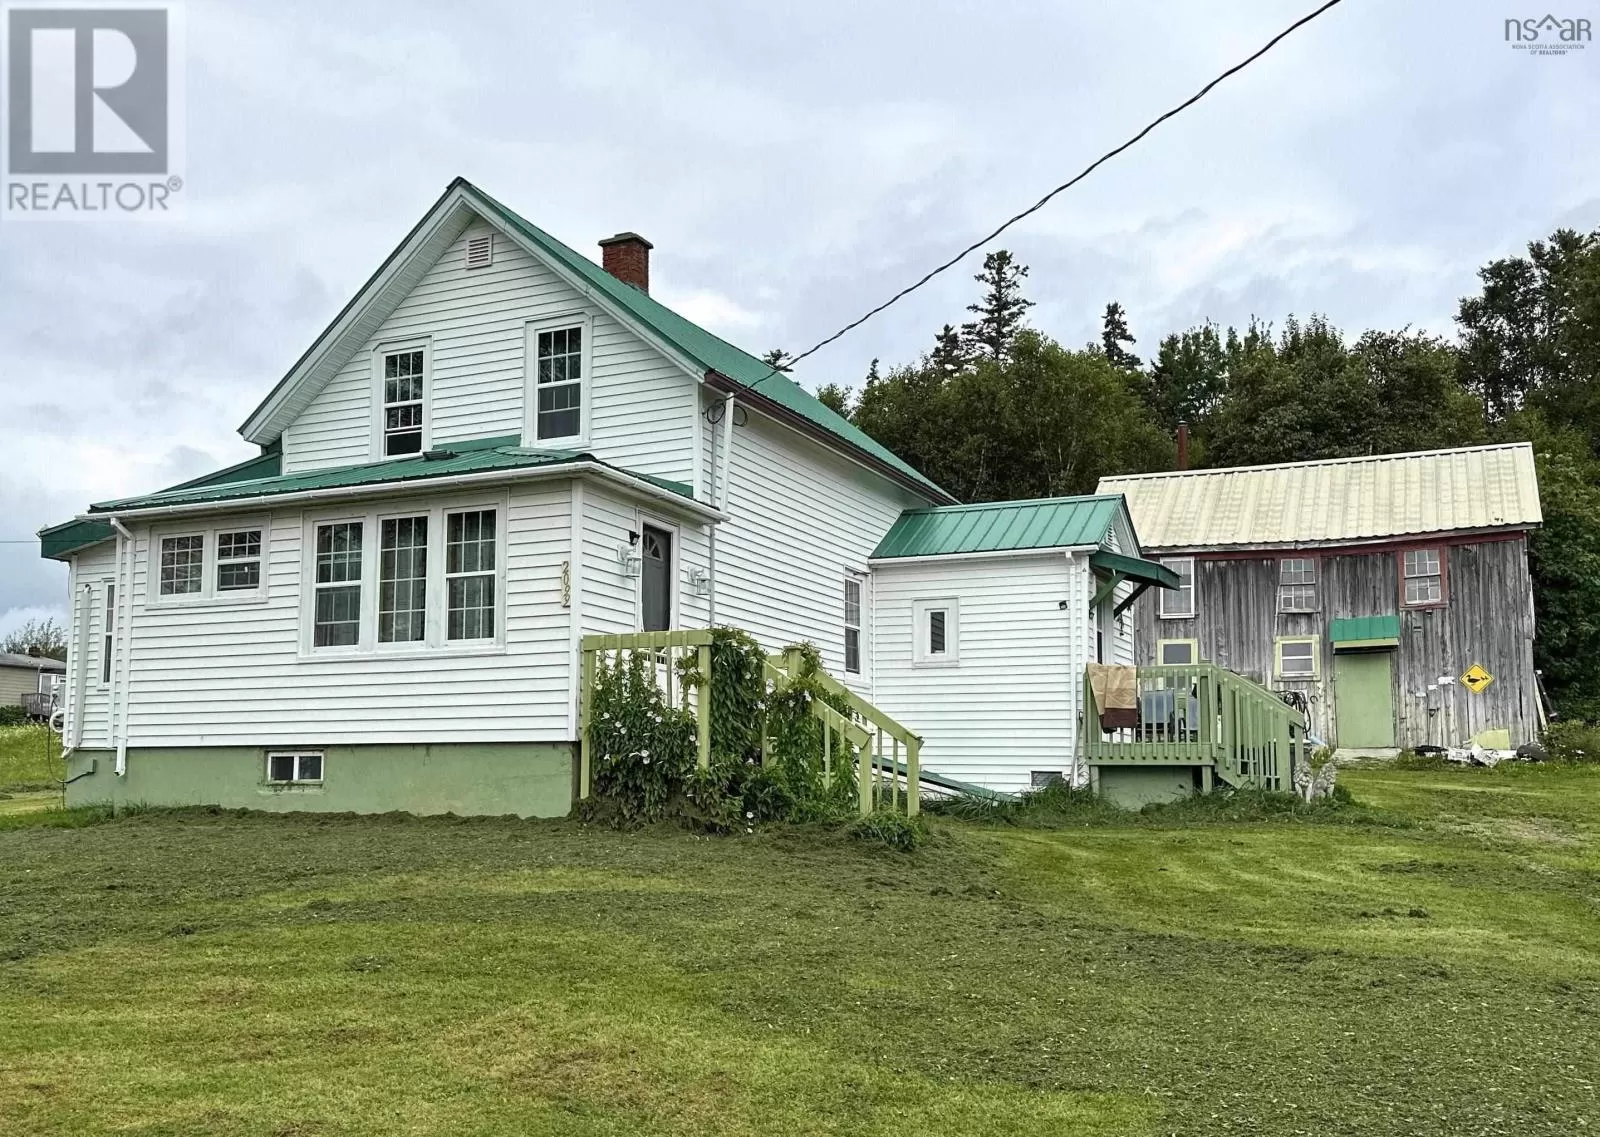 House for rent: 2099 Ns Highway 2, Lower Economy, Nova Scotia B0M 1B0